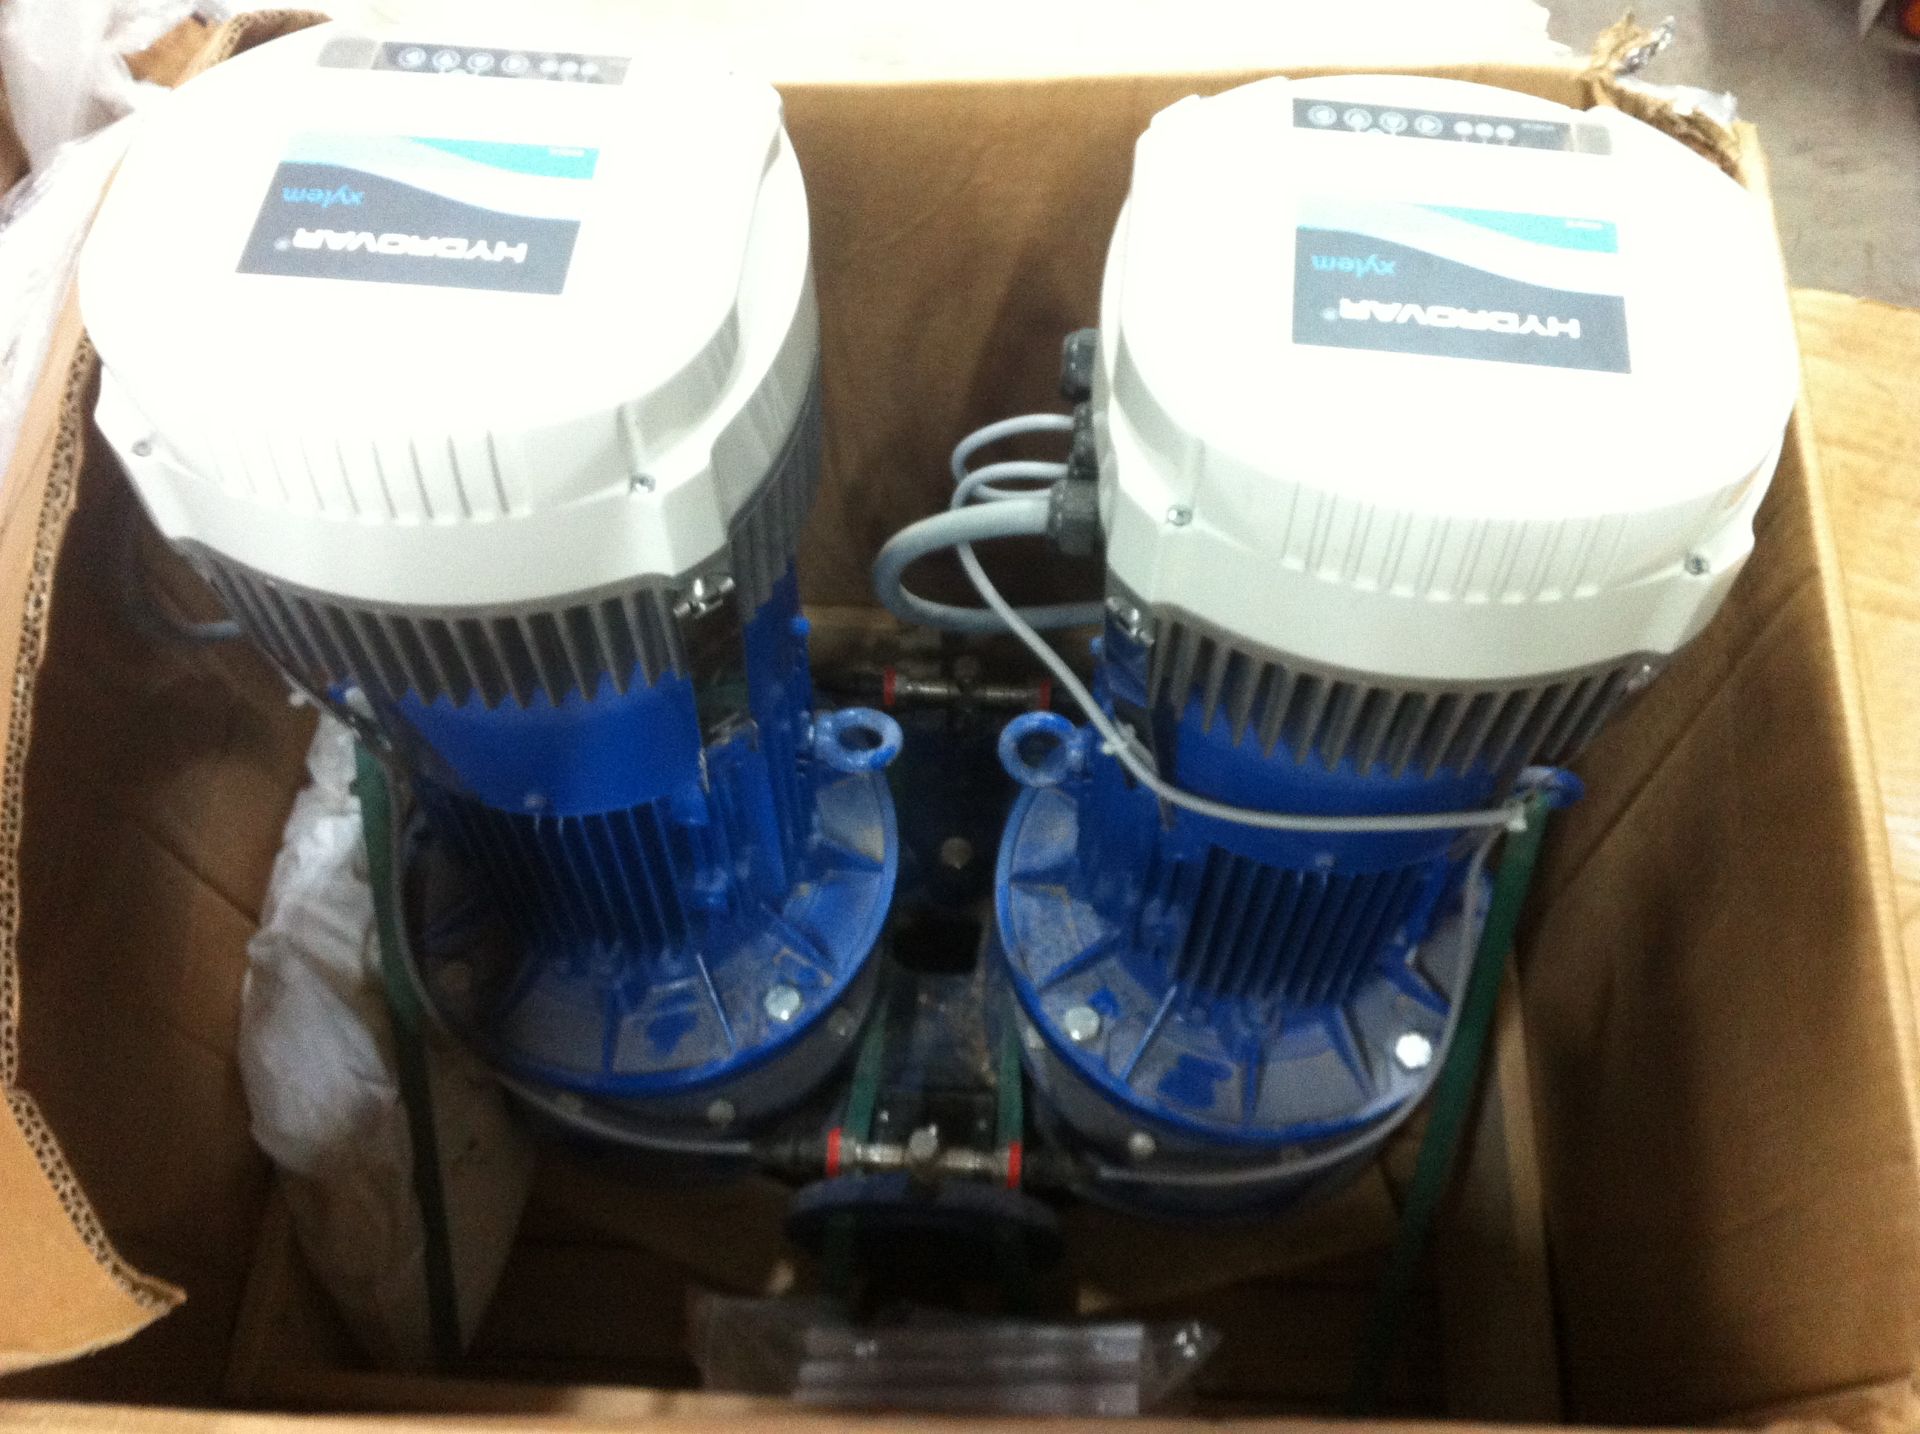 2 x Hydrovar Xylem Invertor Pumps